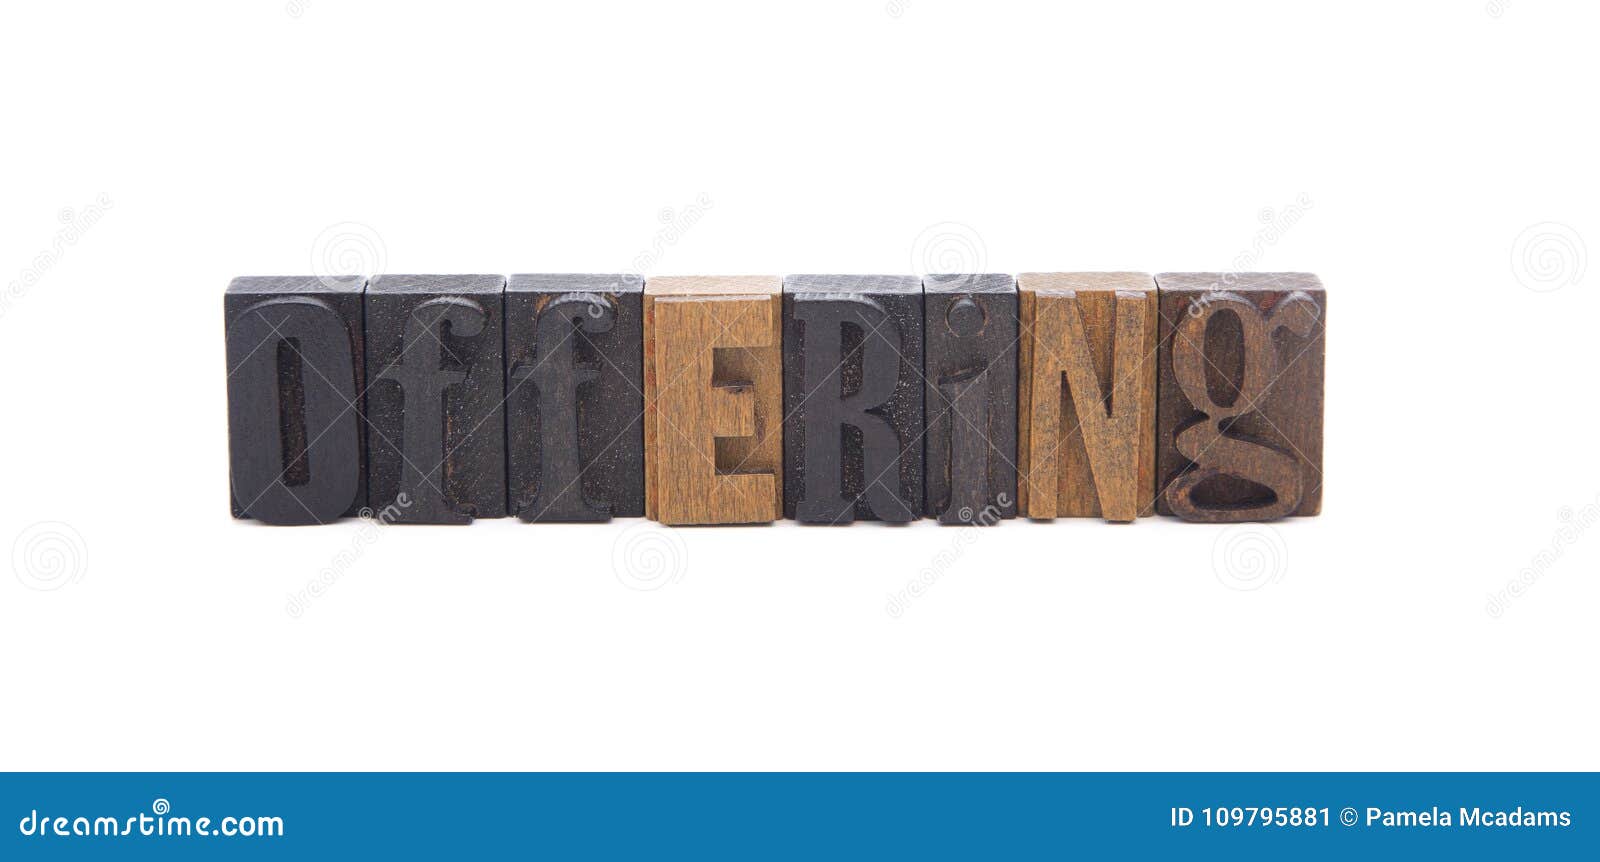 offering spelled in wooden block letters